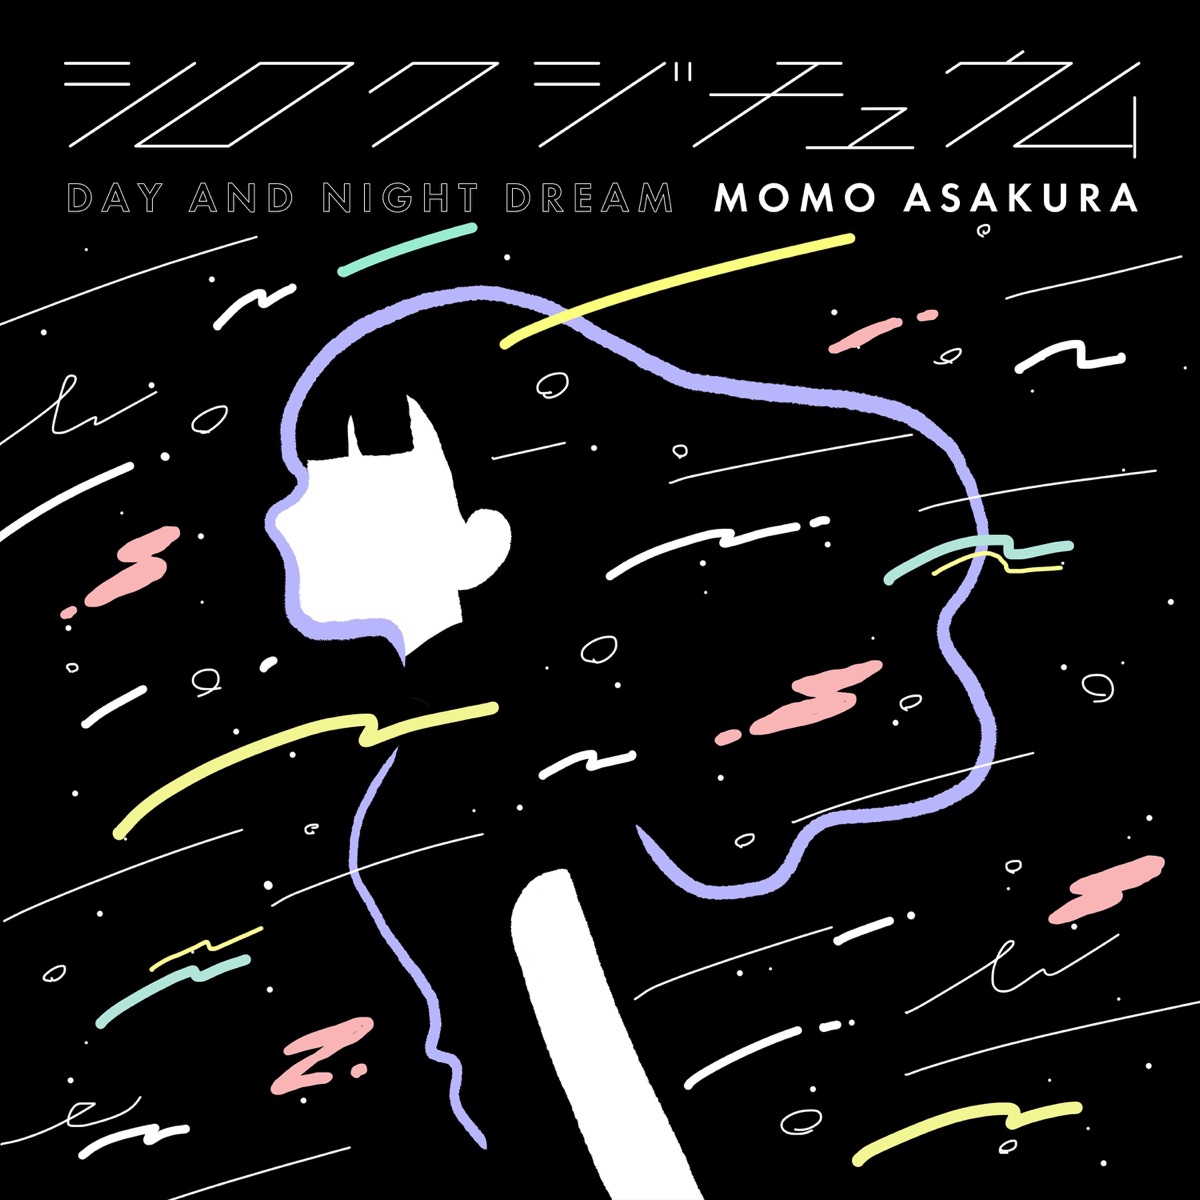 Cover art for『Momo Asakura - シロクジチュウム』from the release『Day and Night Dream